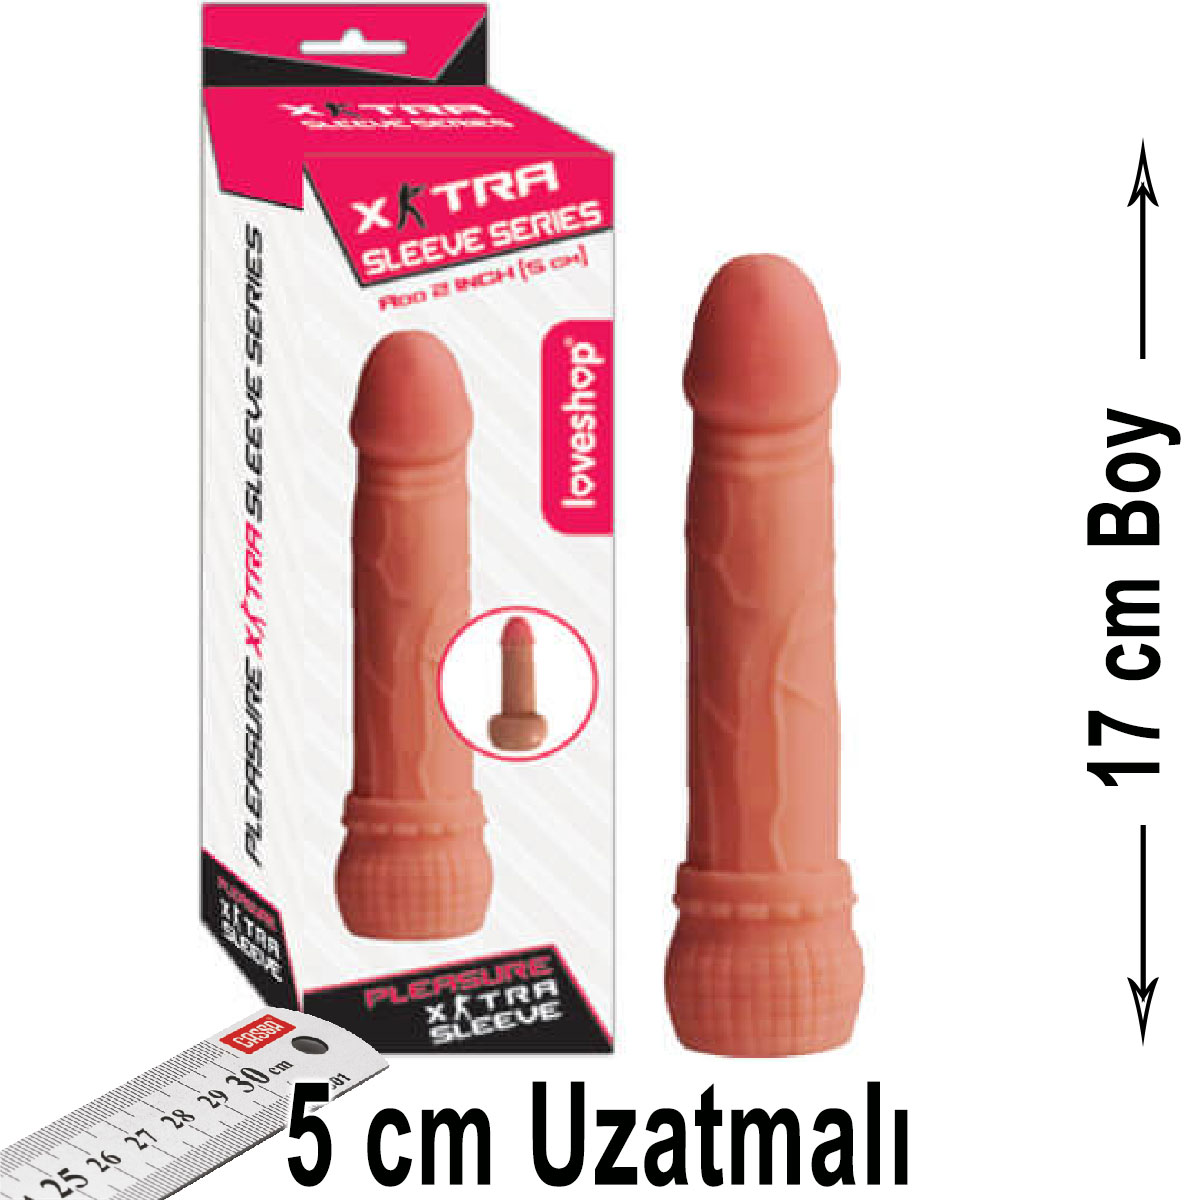 Extra Sleeve 17 cm Boy 5 cm Uzatmali Penis Grntsnde Realistik Penis Kilifi AL-467